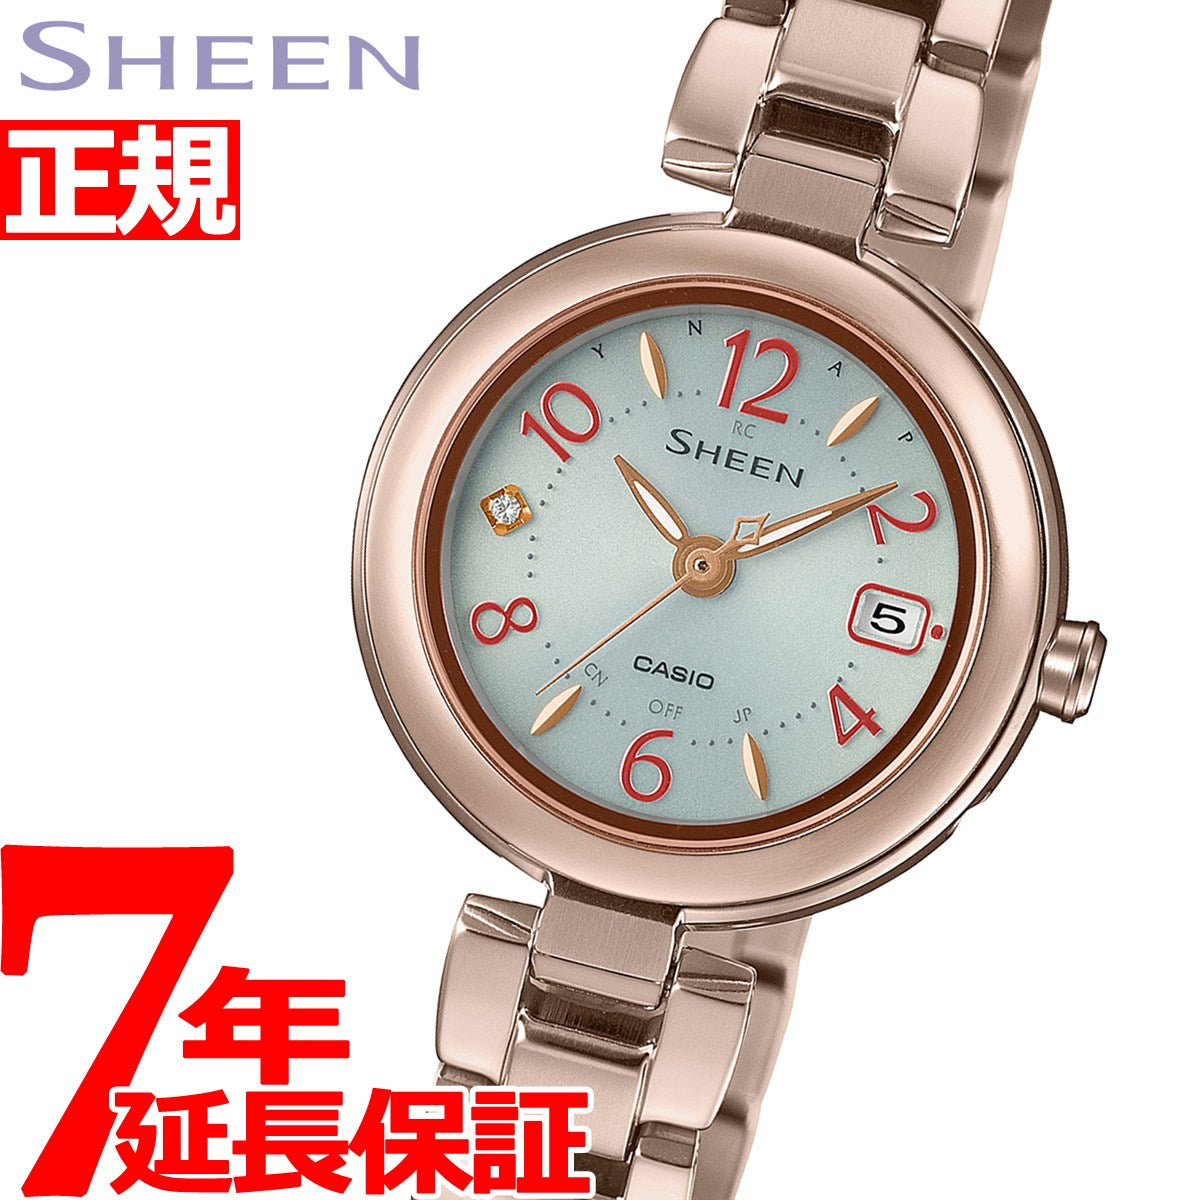 CASIO SHEEN レディース腕時計 - 時計